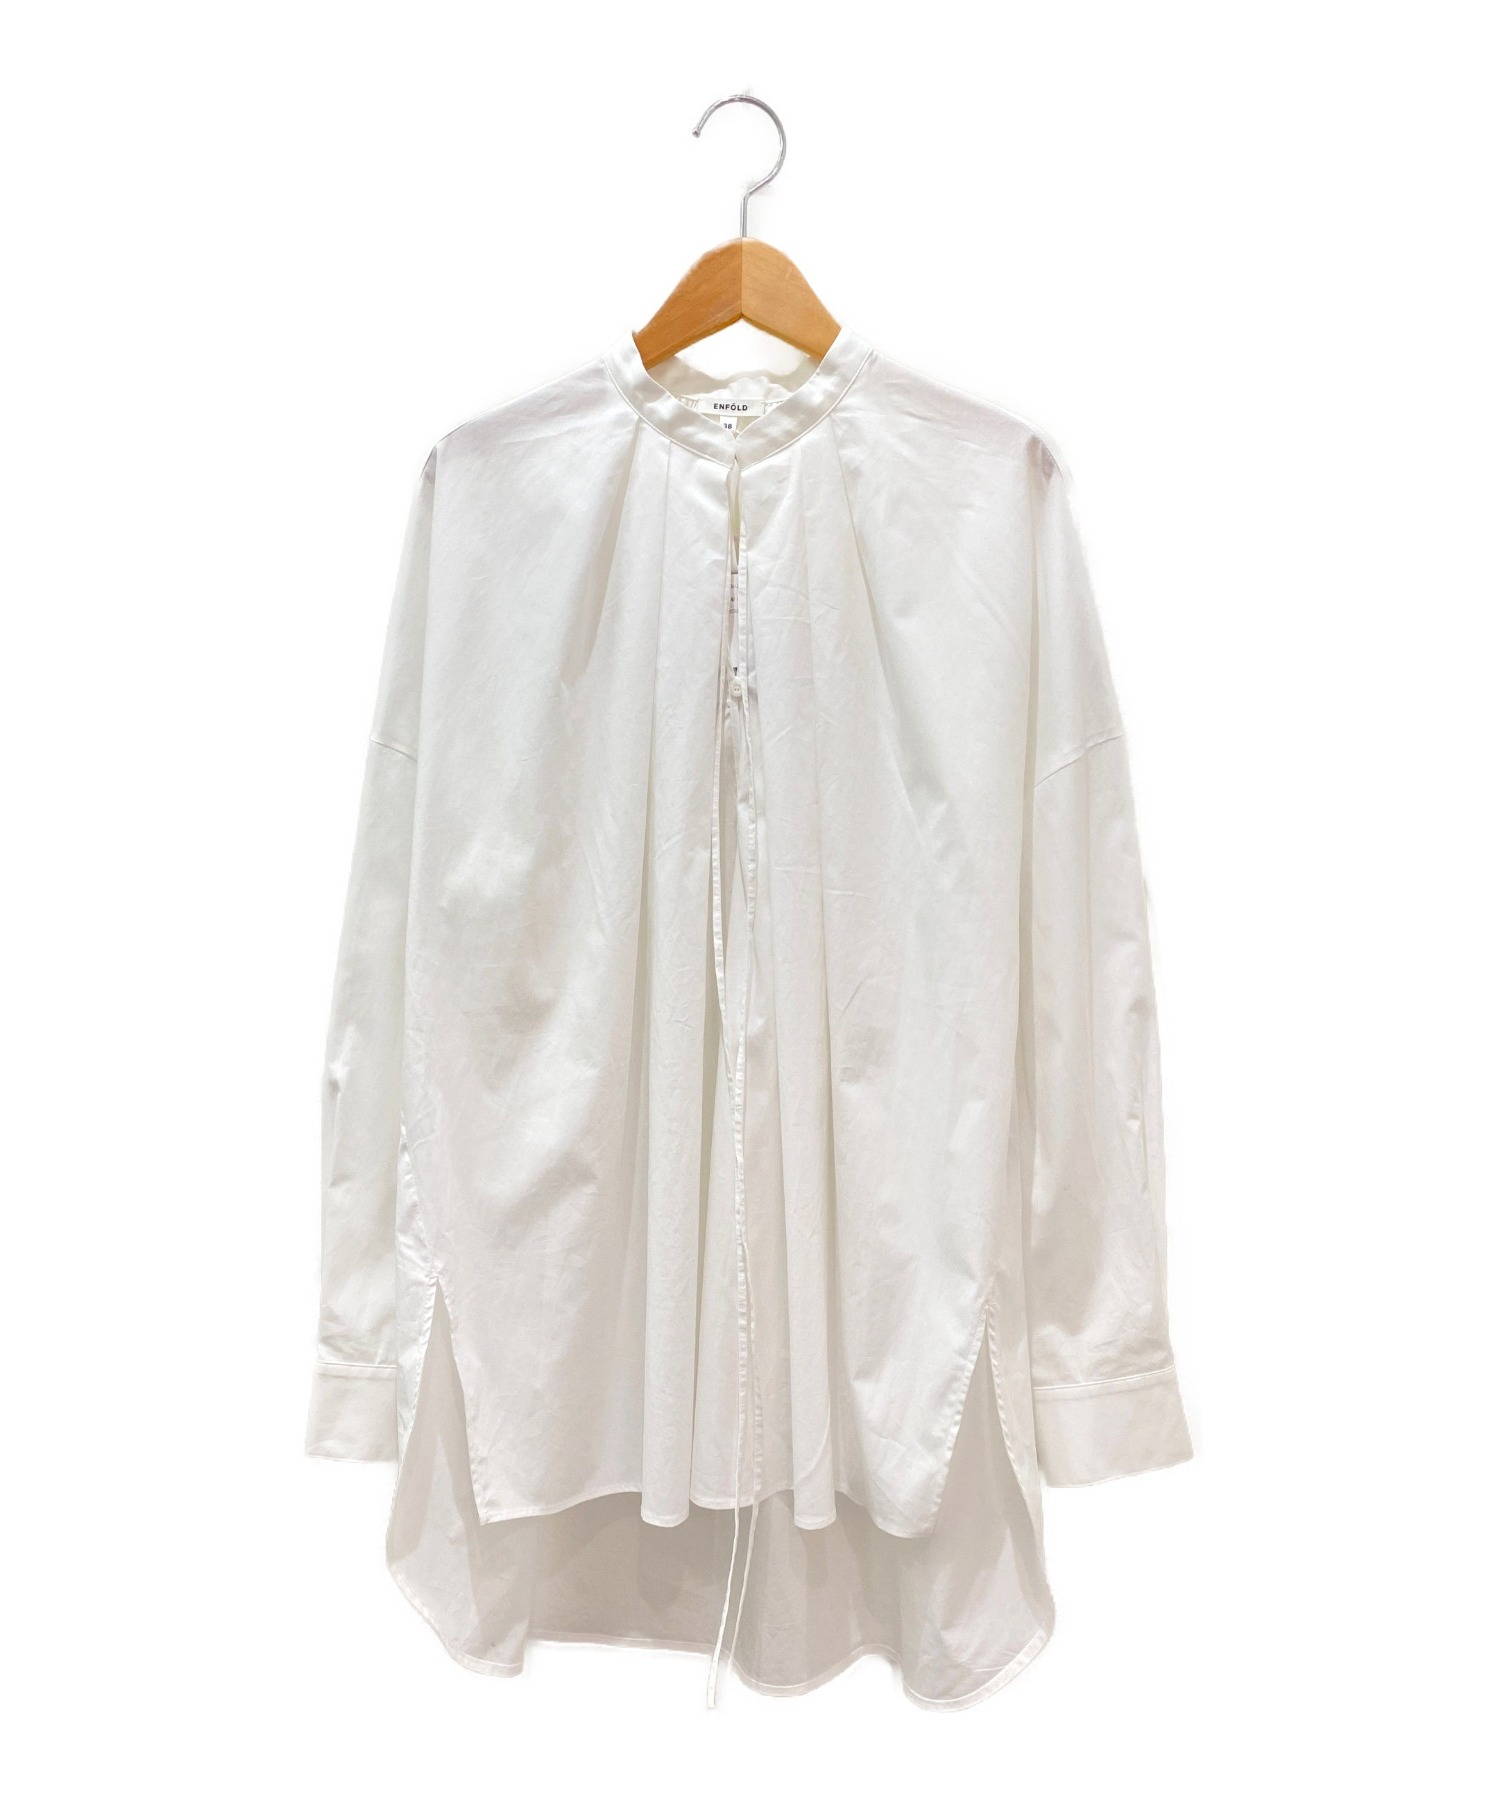 ENFOLD (エンフォルド) SOMELOSオーバーシャツ ホワイト サイズ:38 未使用品